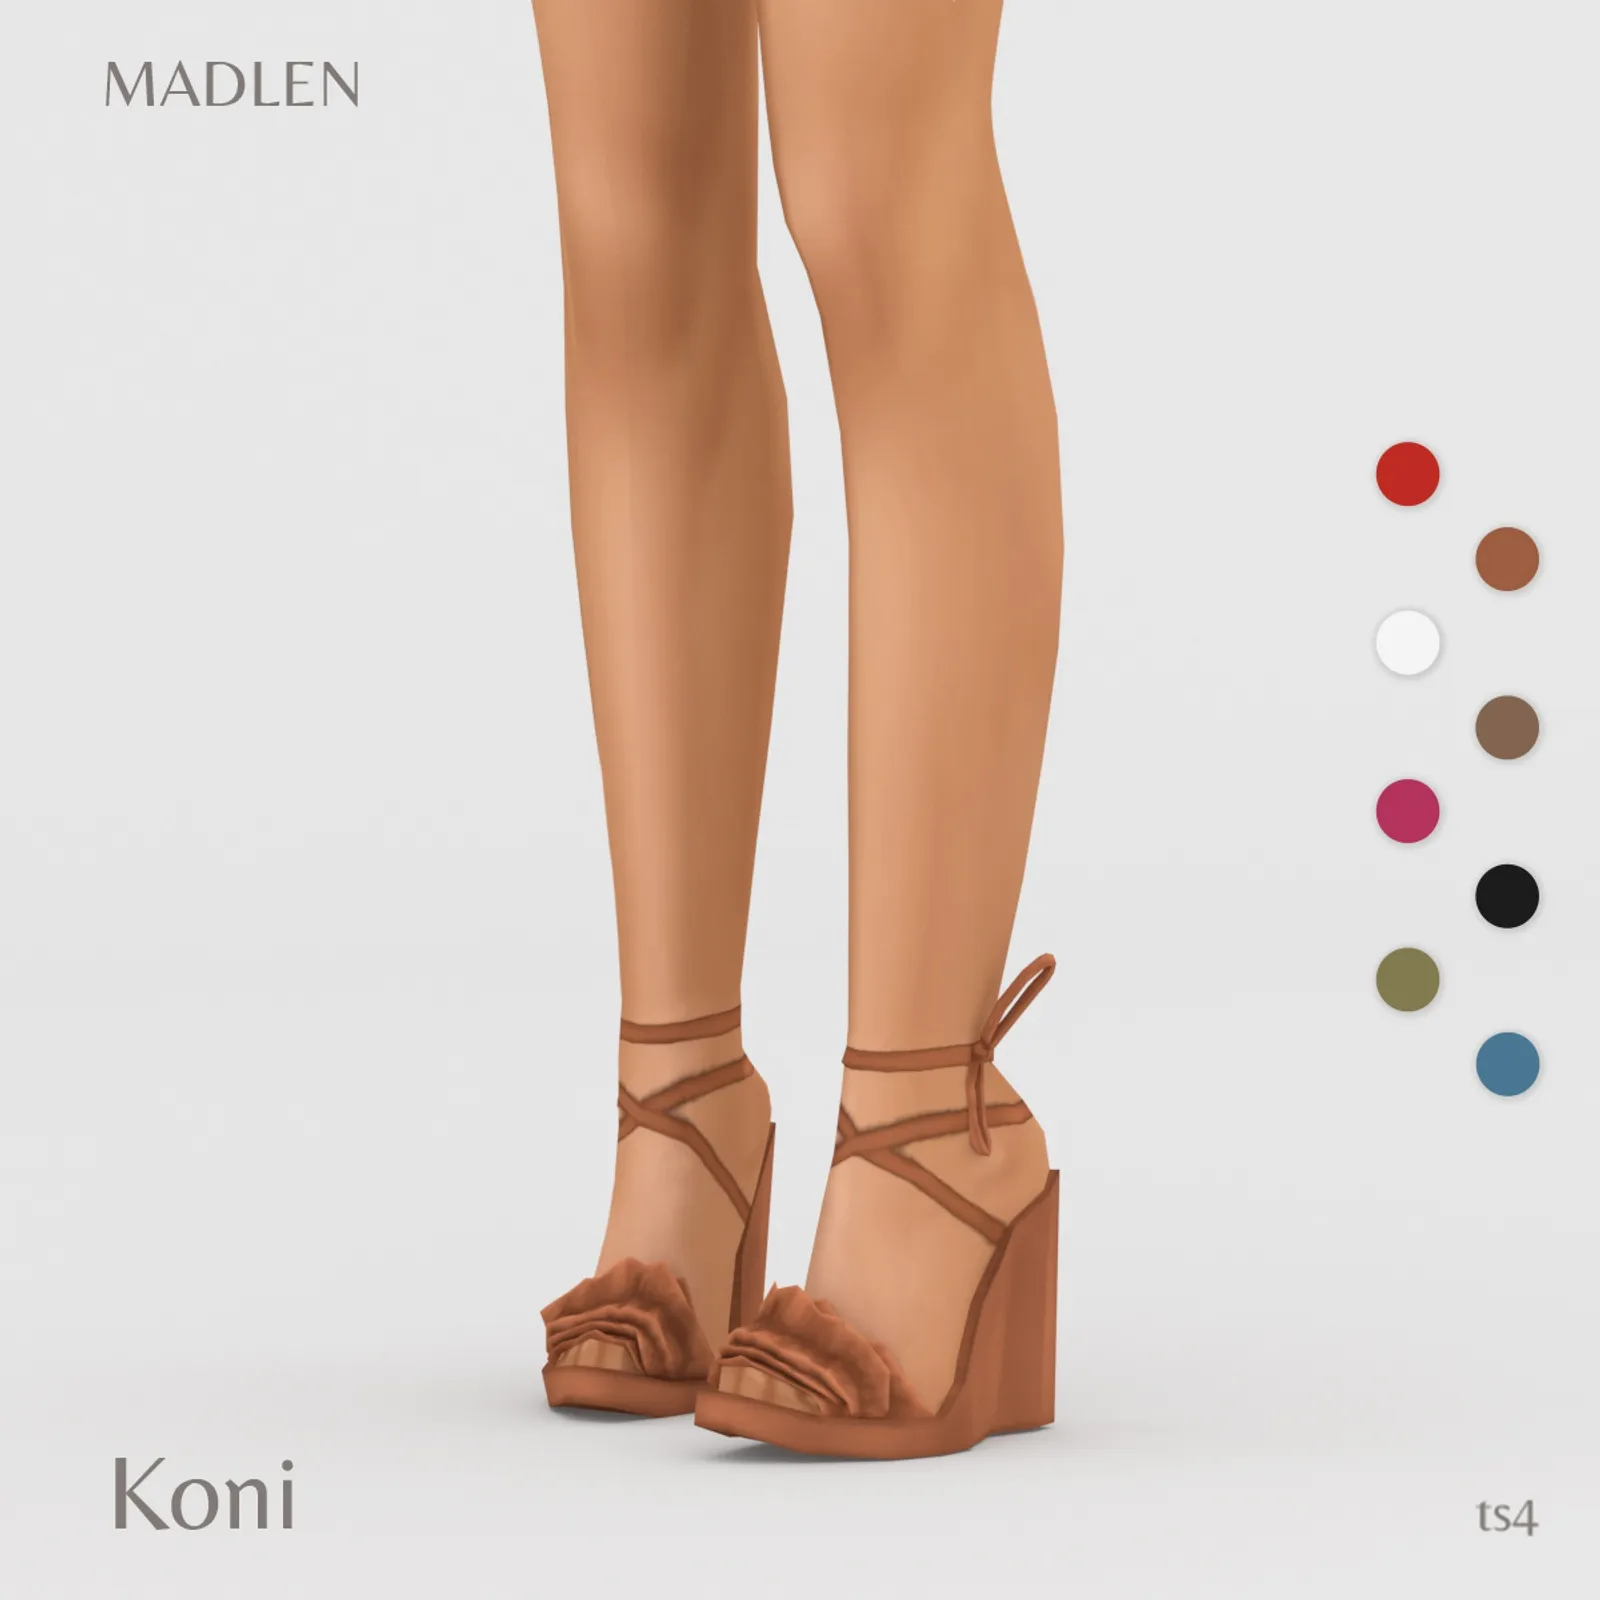 Koni Shoes (Wedge)